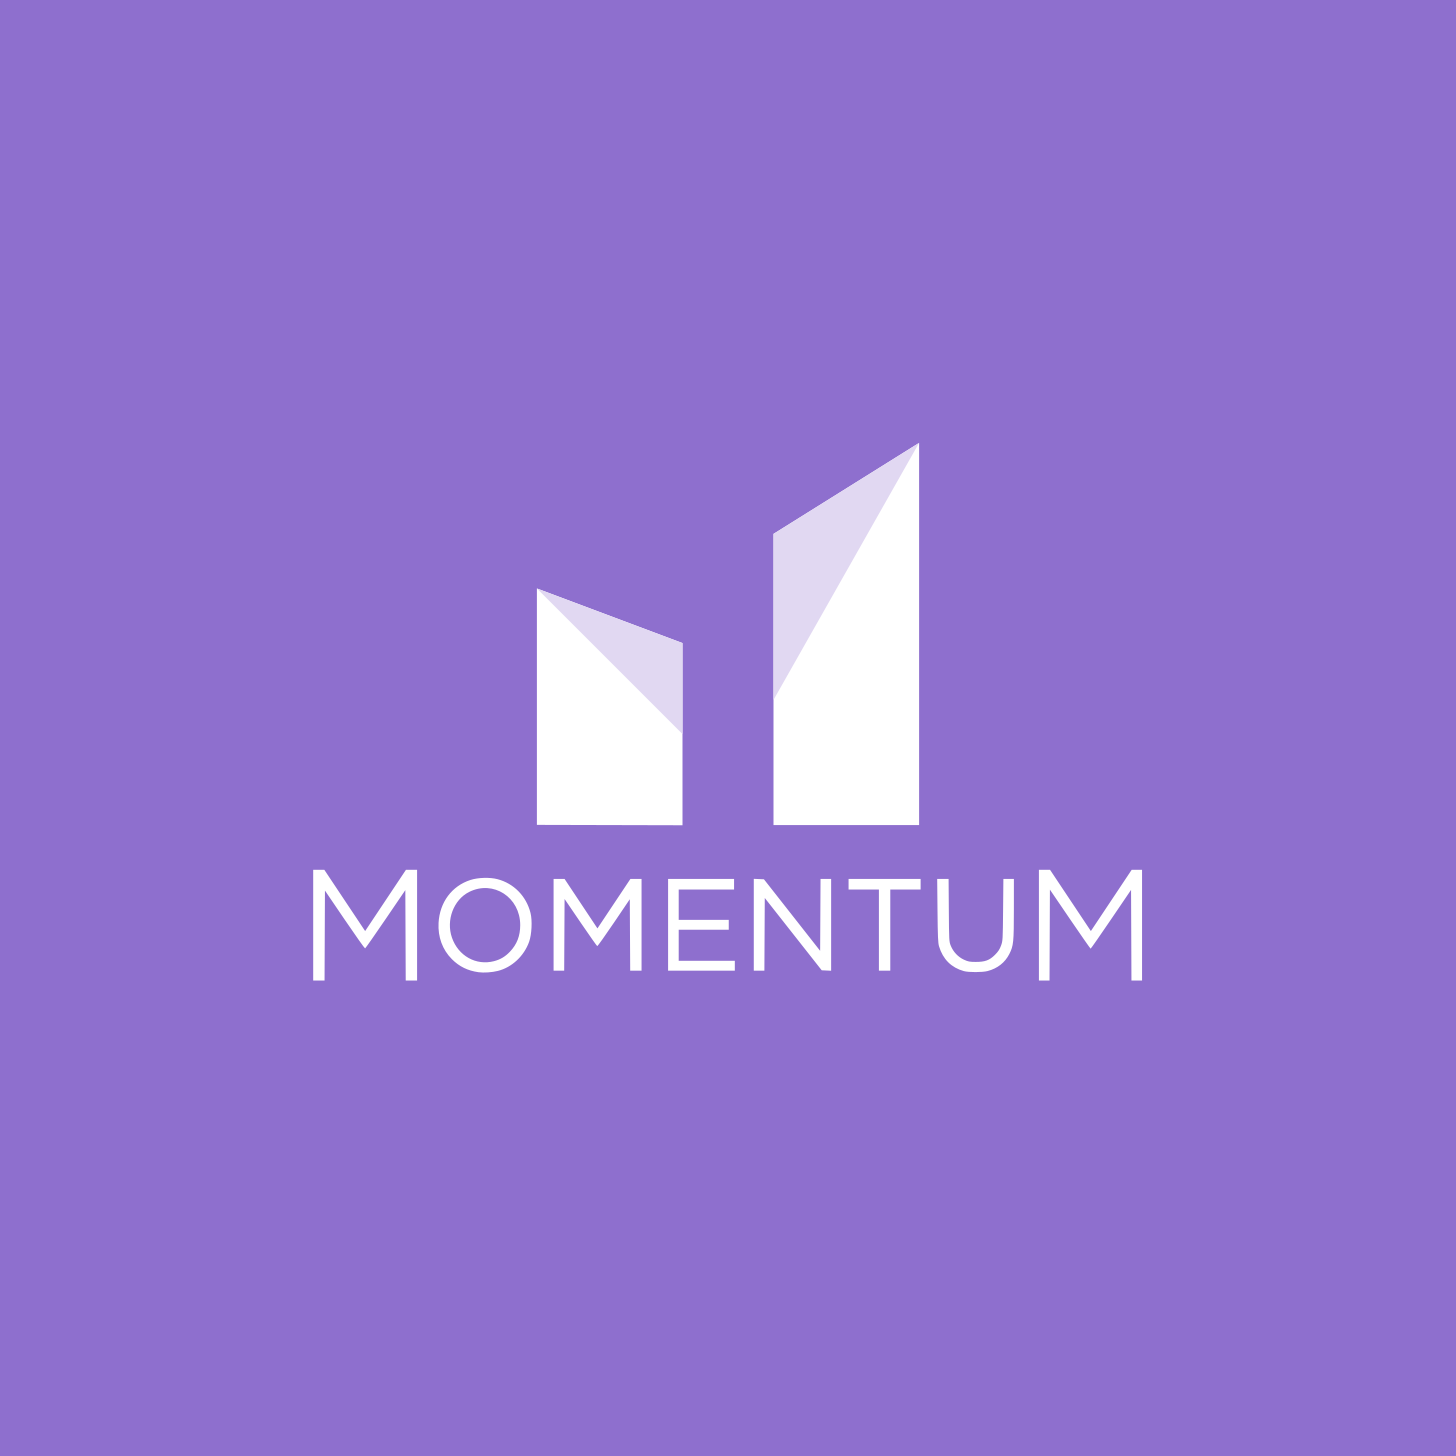 https://upload.wikimedia.org/wikipedia/commons/4/4b/Logo_of_the_Momentum_Movement.svg